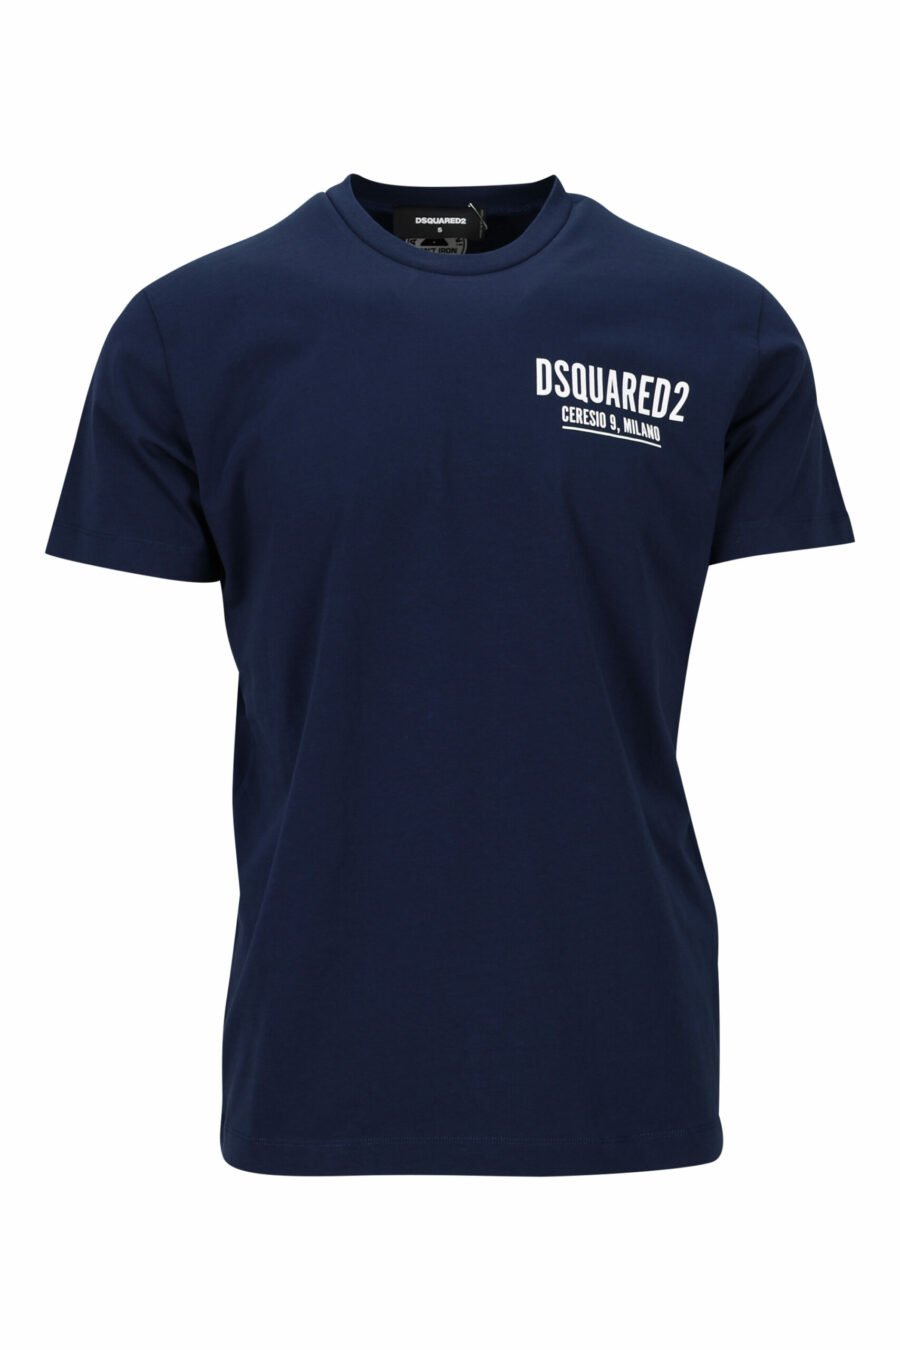 T-shirt azul escura com minilogo "ceresio 9, milano" - 8054148505196 scaled